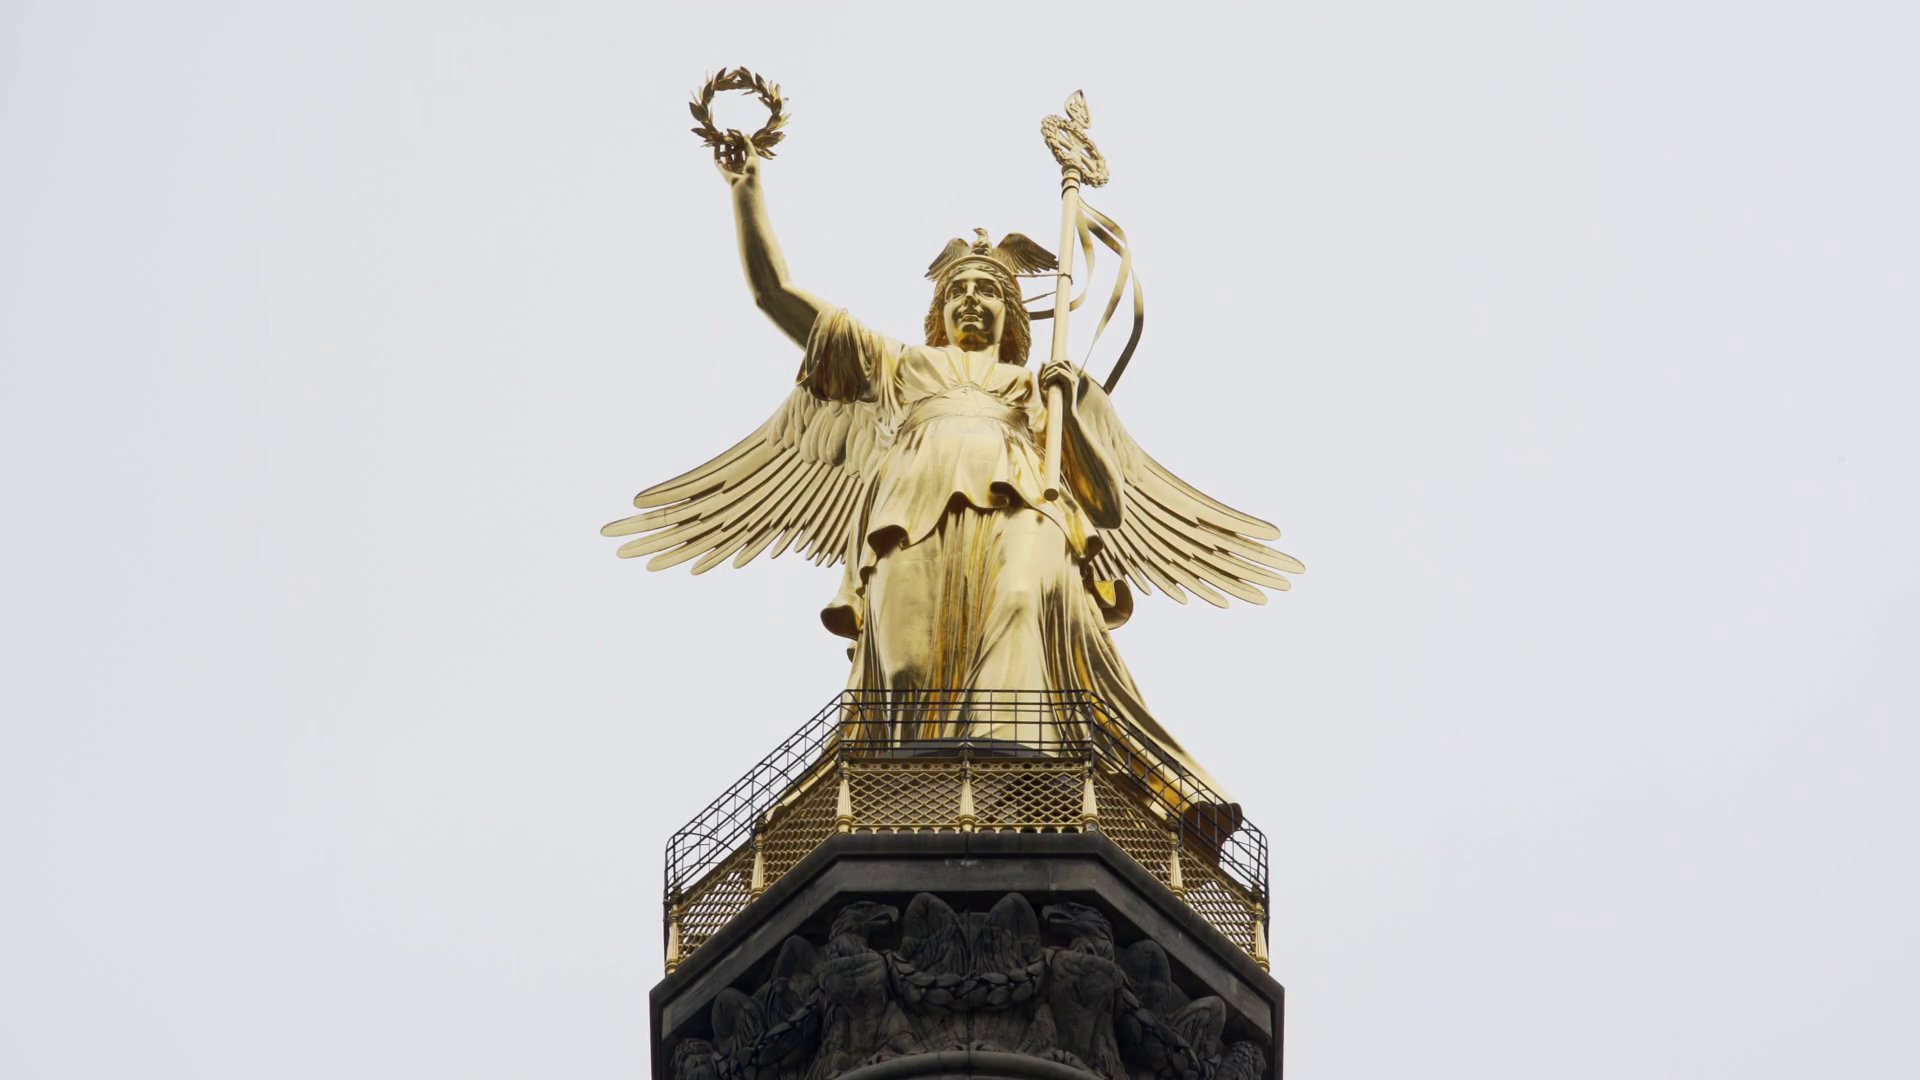 Berlin Victory Column, Siegessaule, statue of Victoria, close up ...